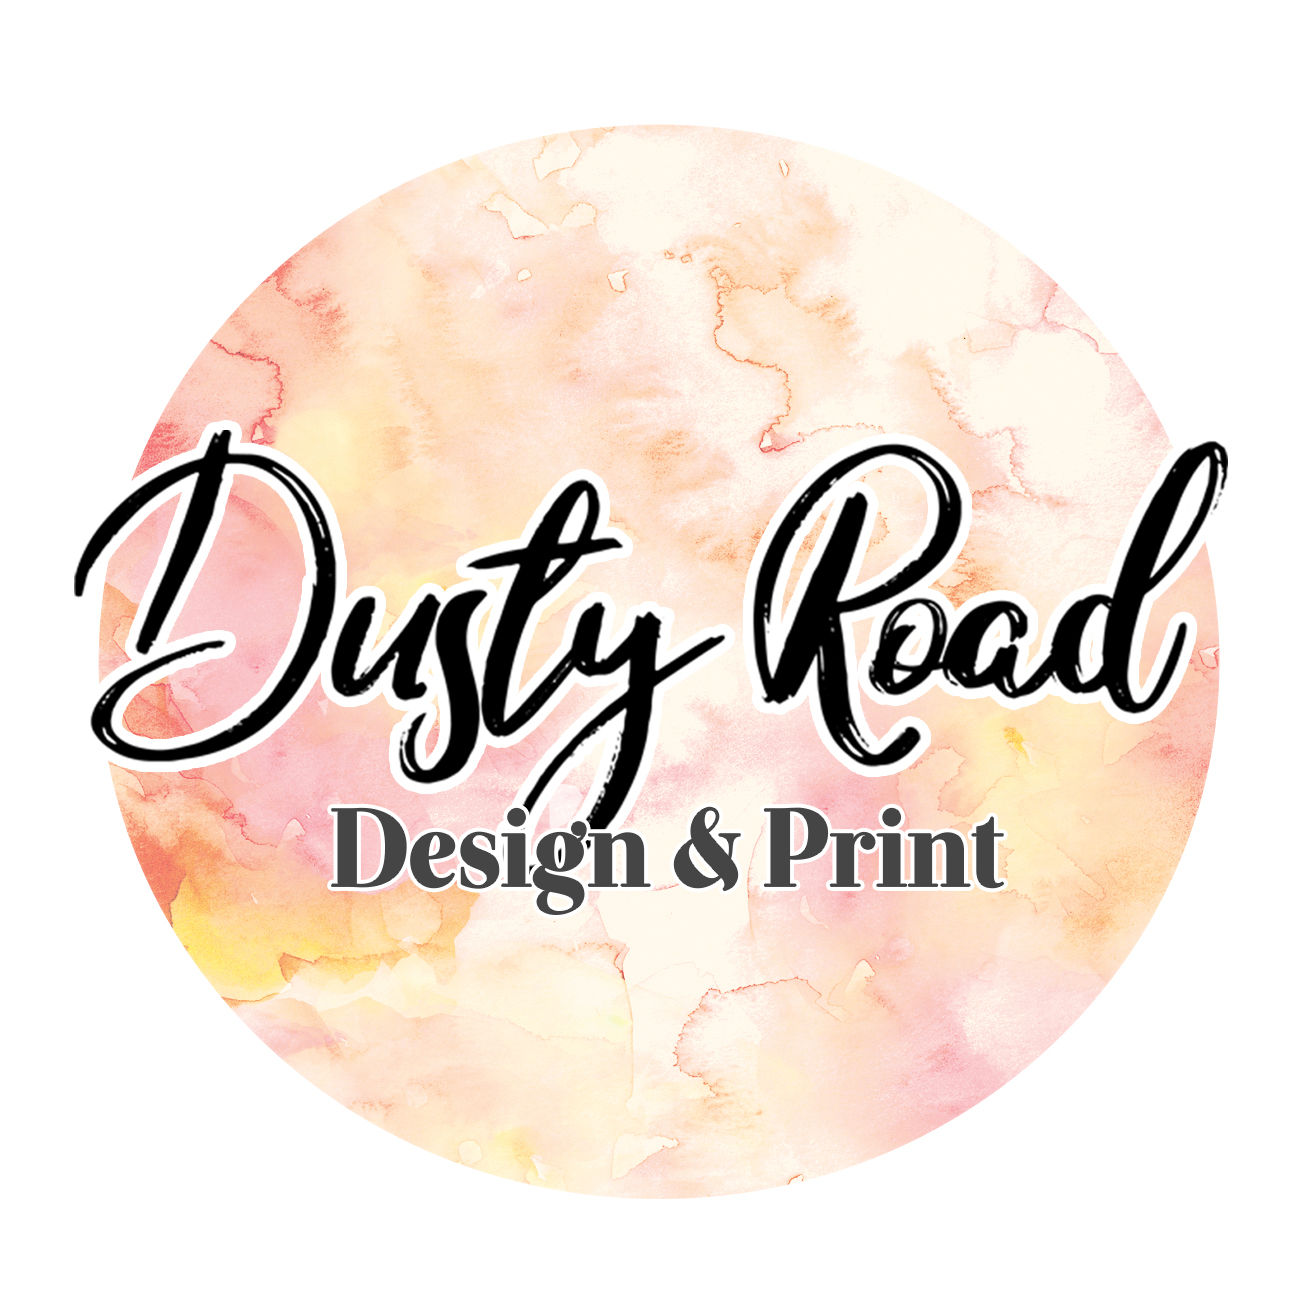 dusty road design 